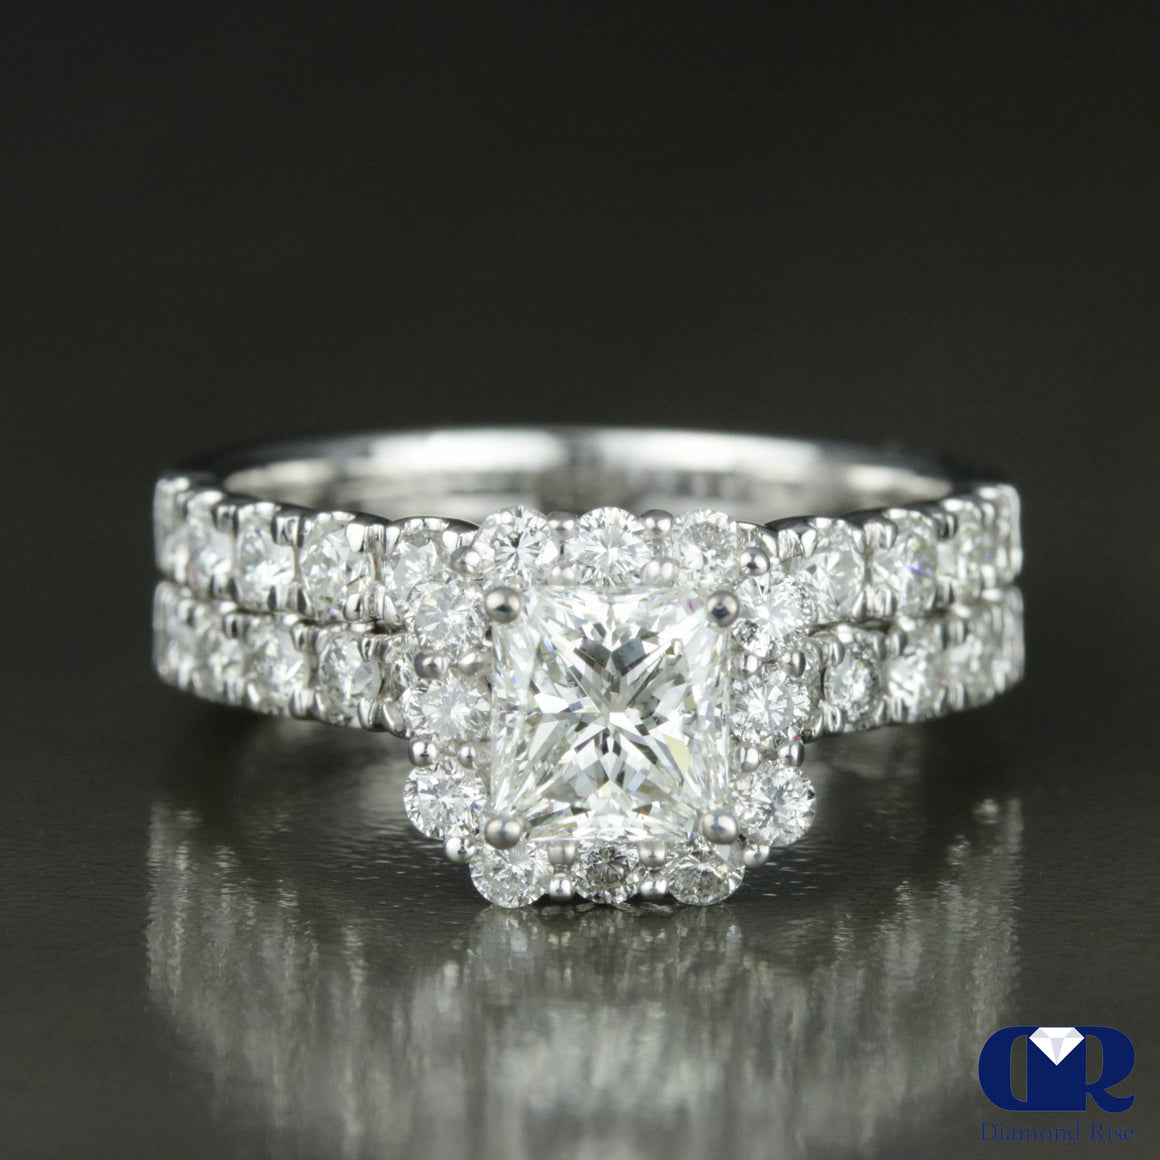 2.03 Carat Princess Cut Diamond Halo Engagement Ring Set In 14K White Gold - Diamond Rise Jewelry